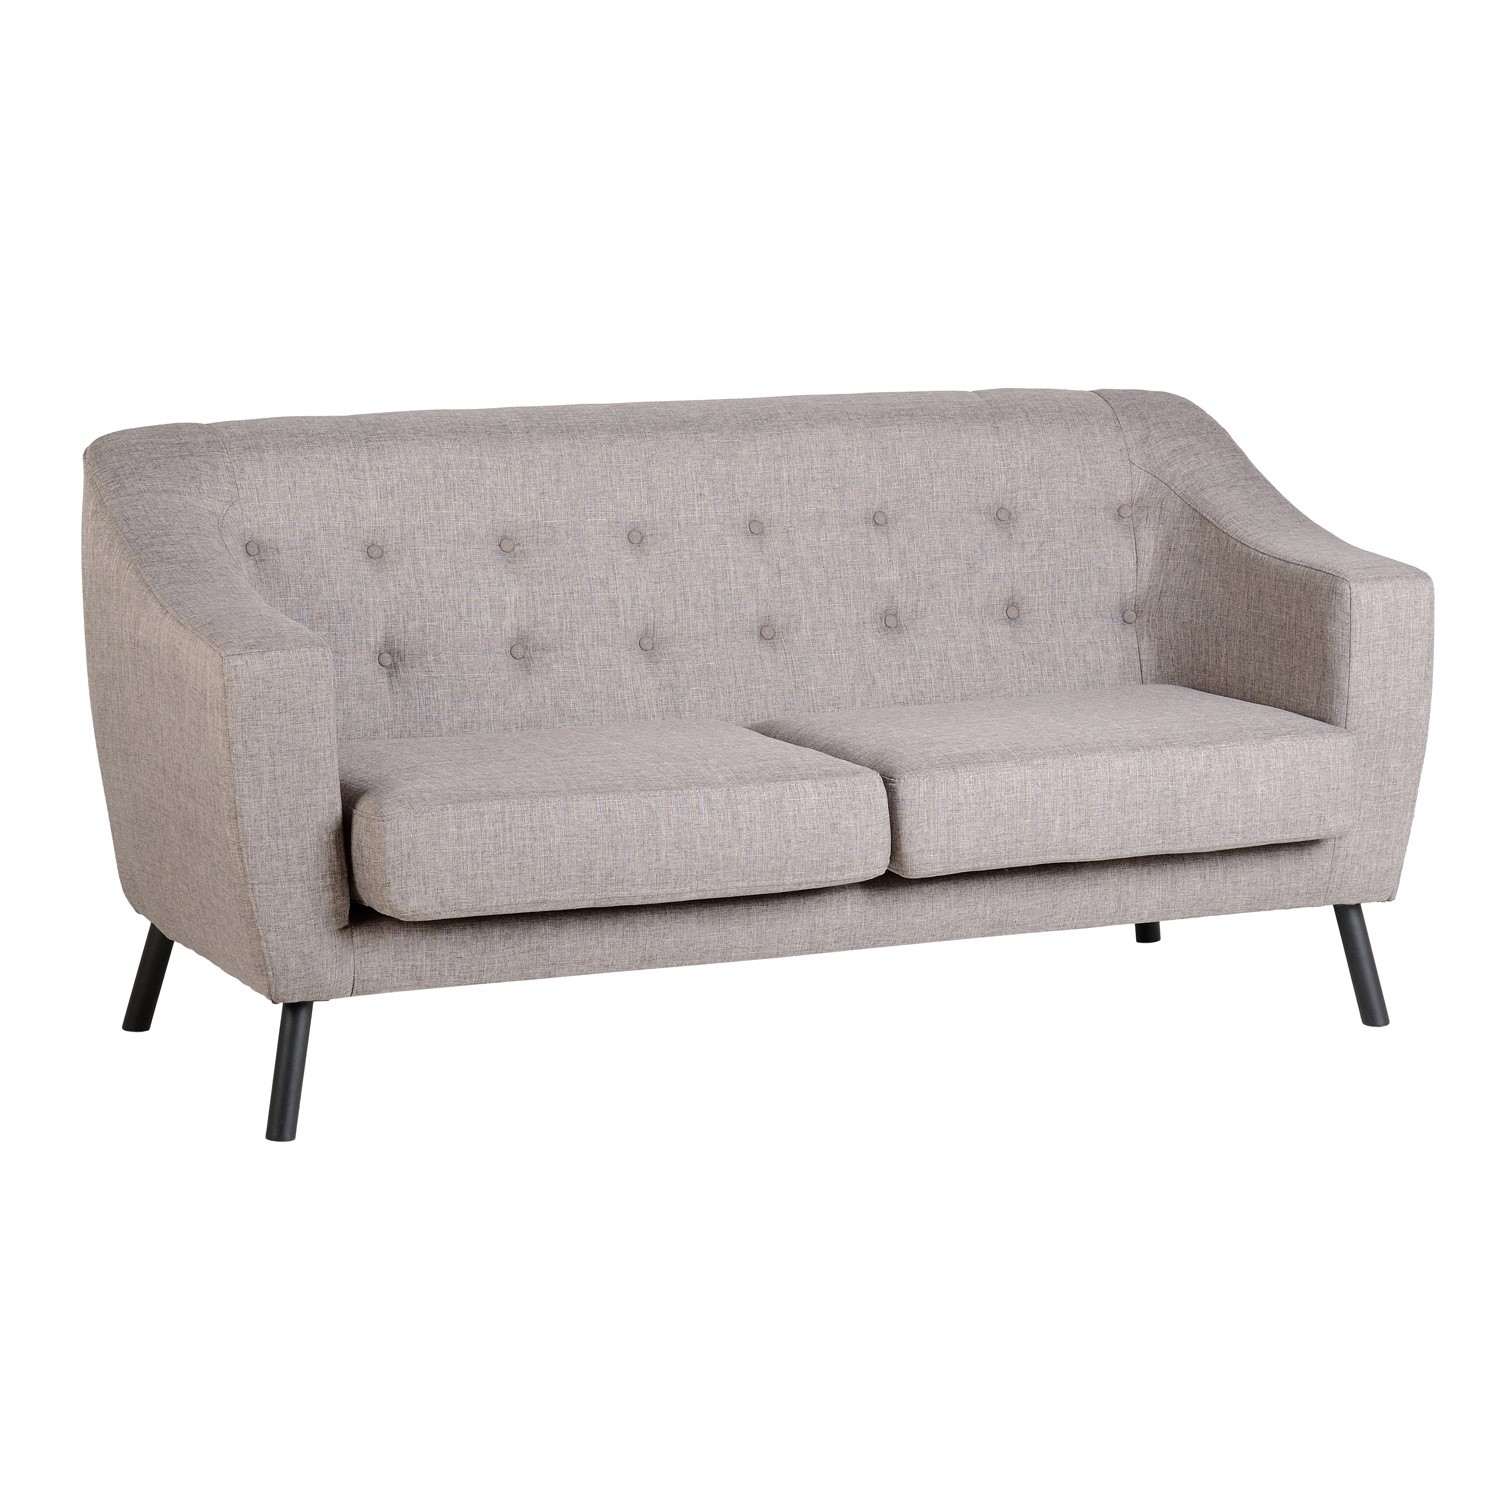 Seconique Ashley Sofa Collection Chair 2 /& 3 Seater Sofa Beige Dark Grey